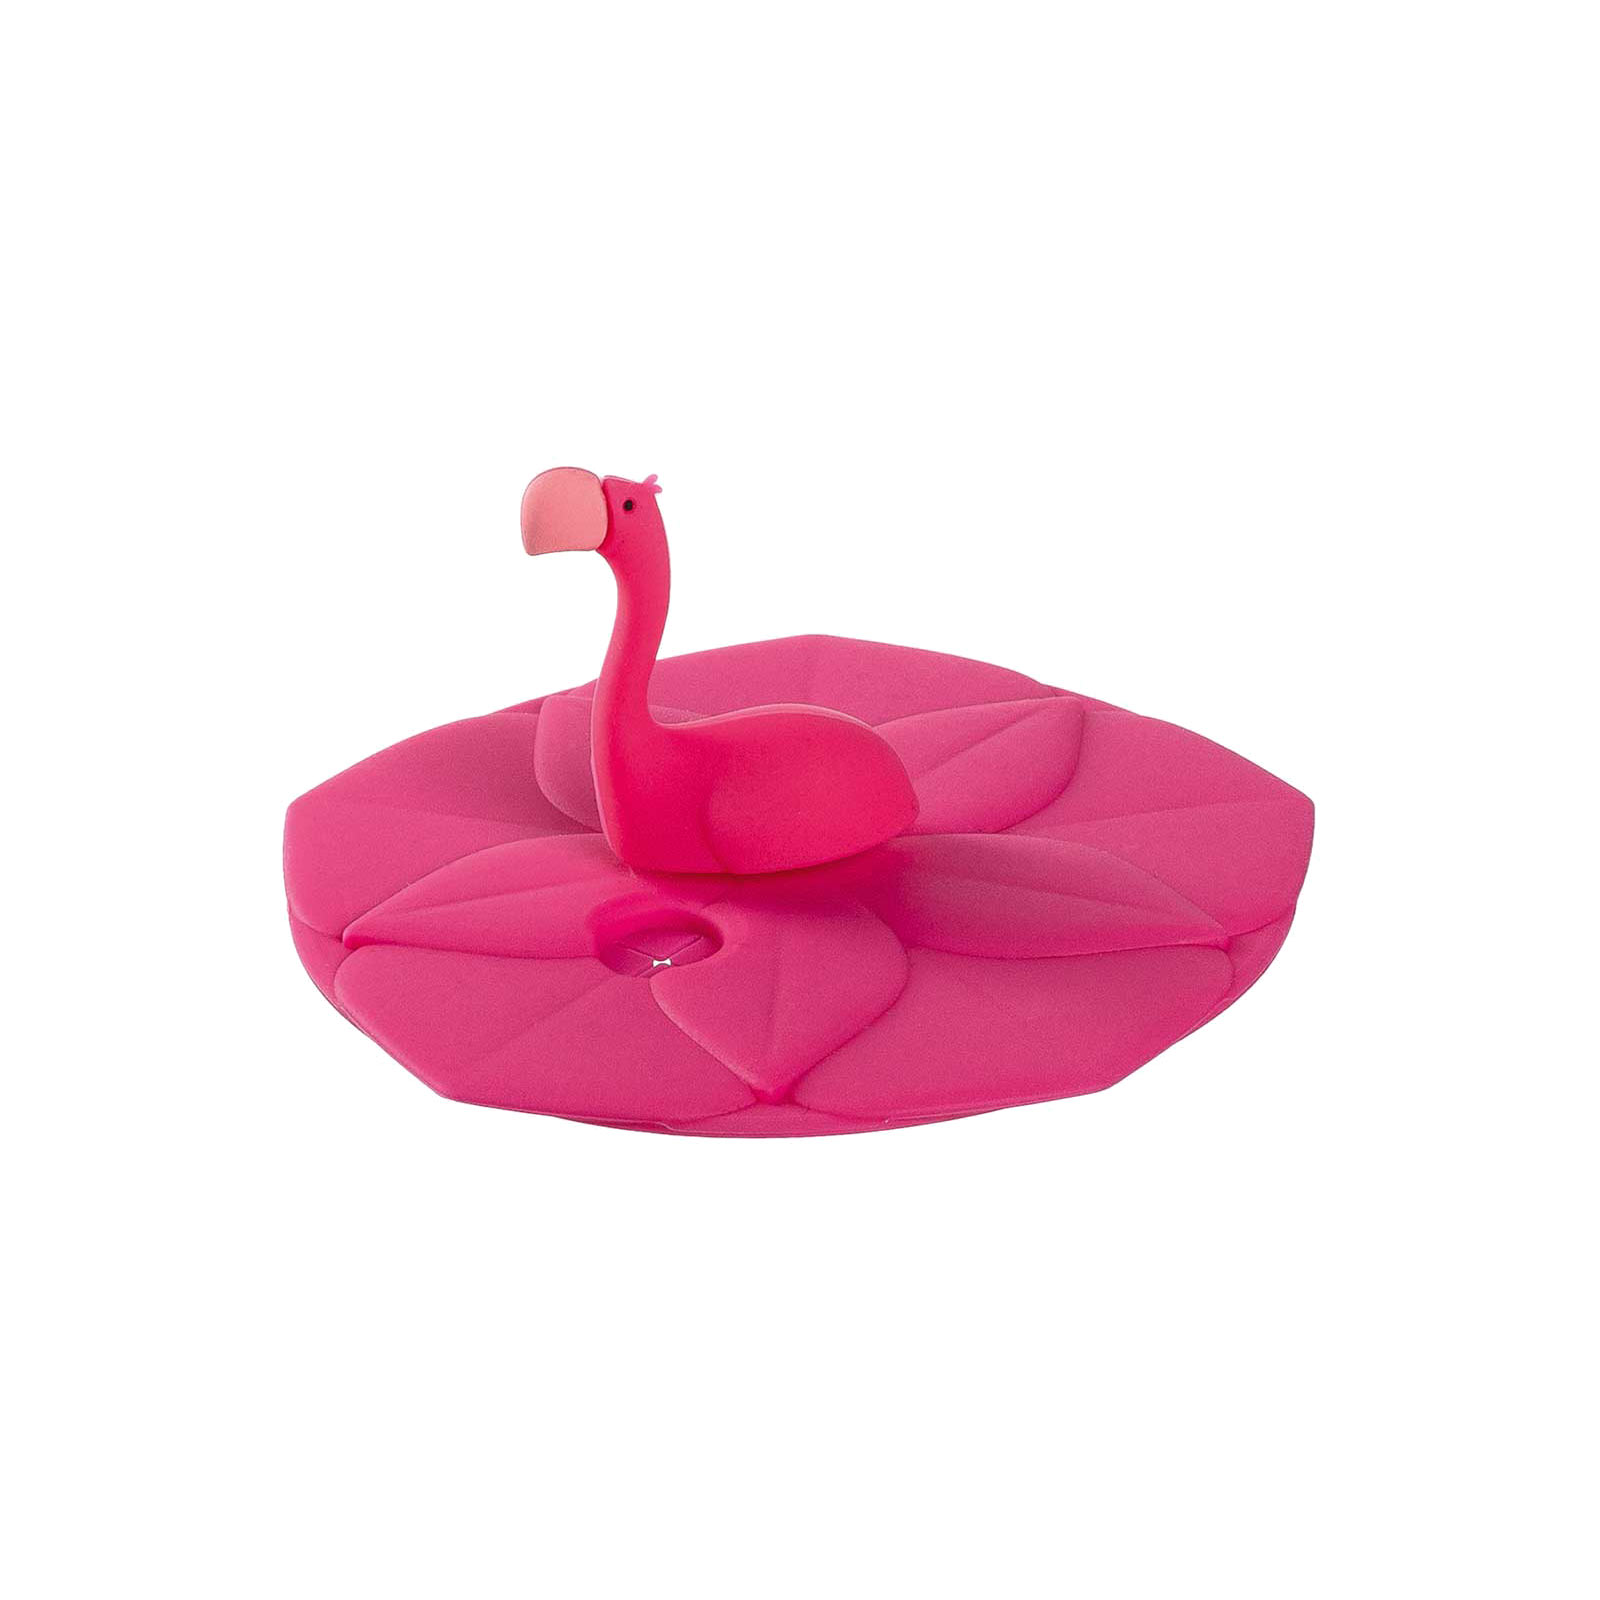 Leonardo BAMBINI 2er Set Kinderbecher mit Deckel 'Einhorn' & 'Flamingo'